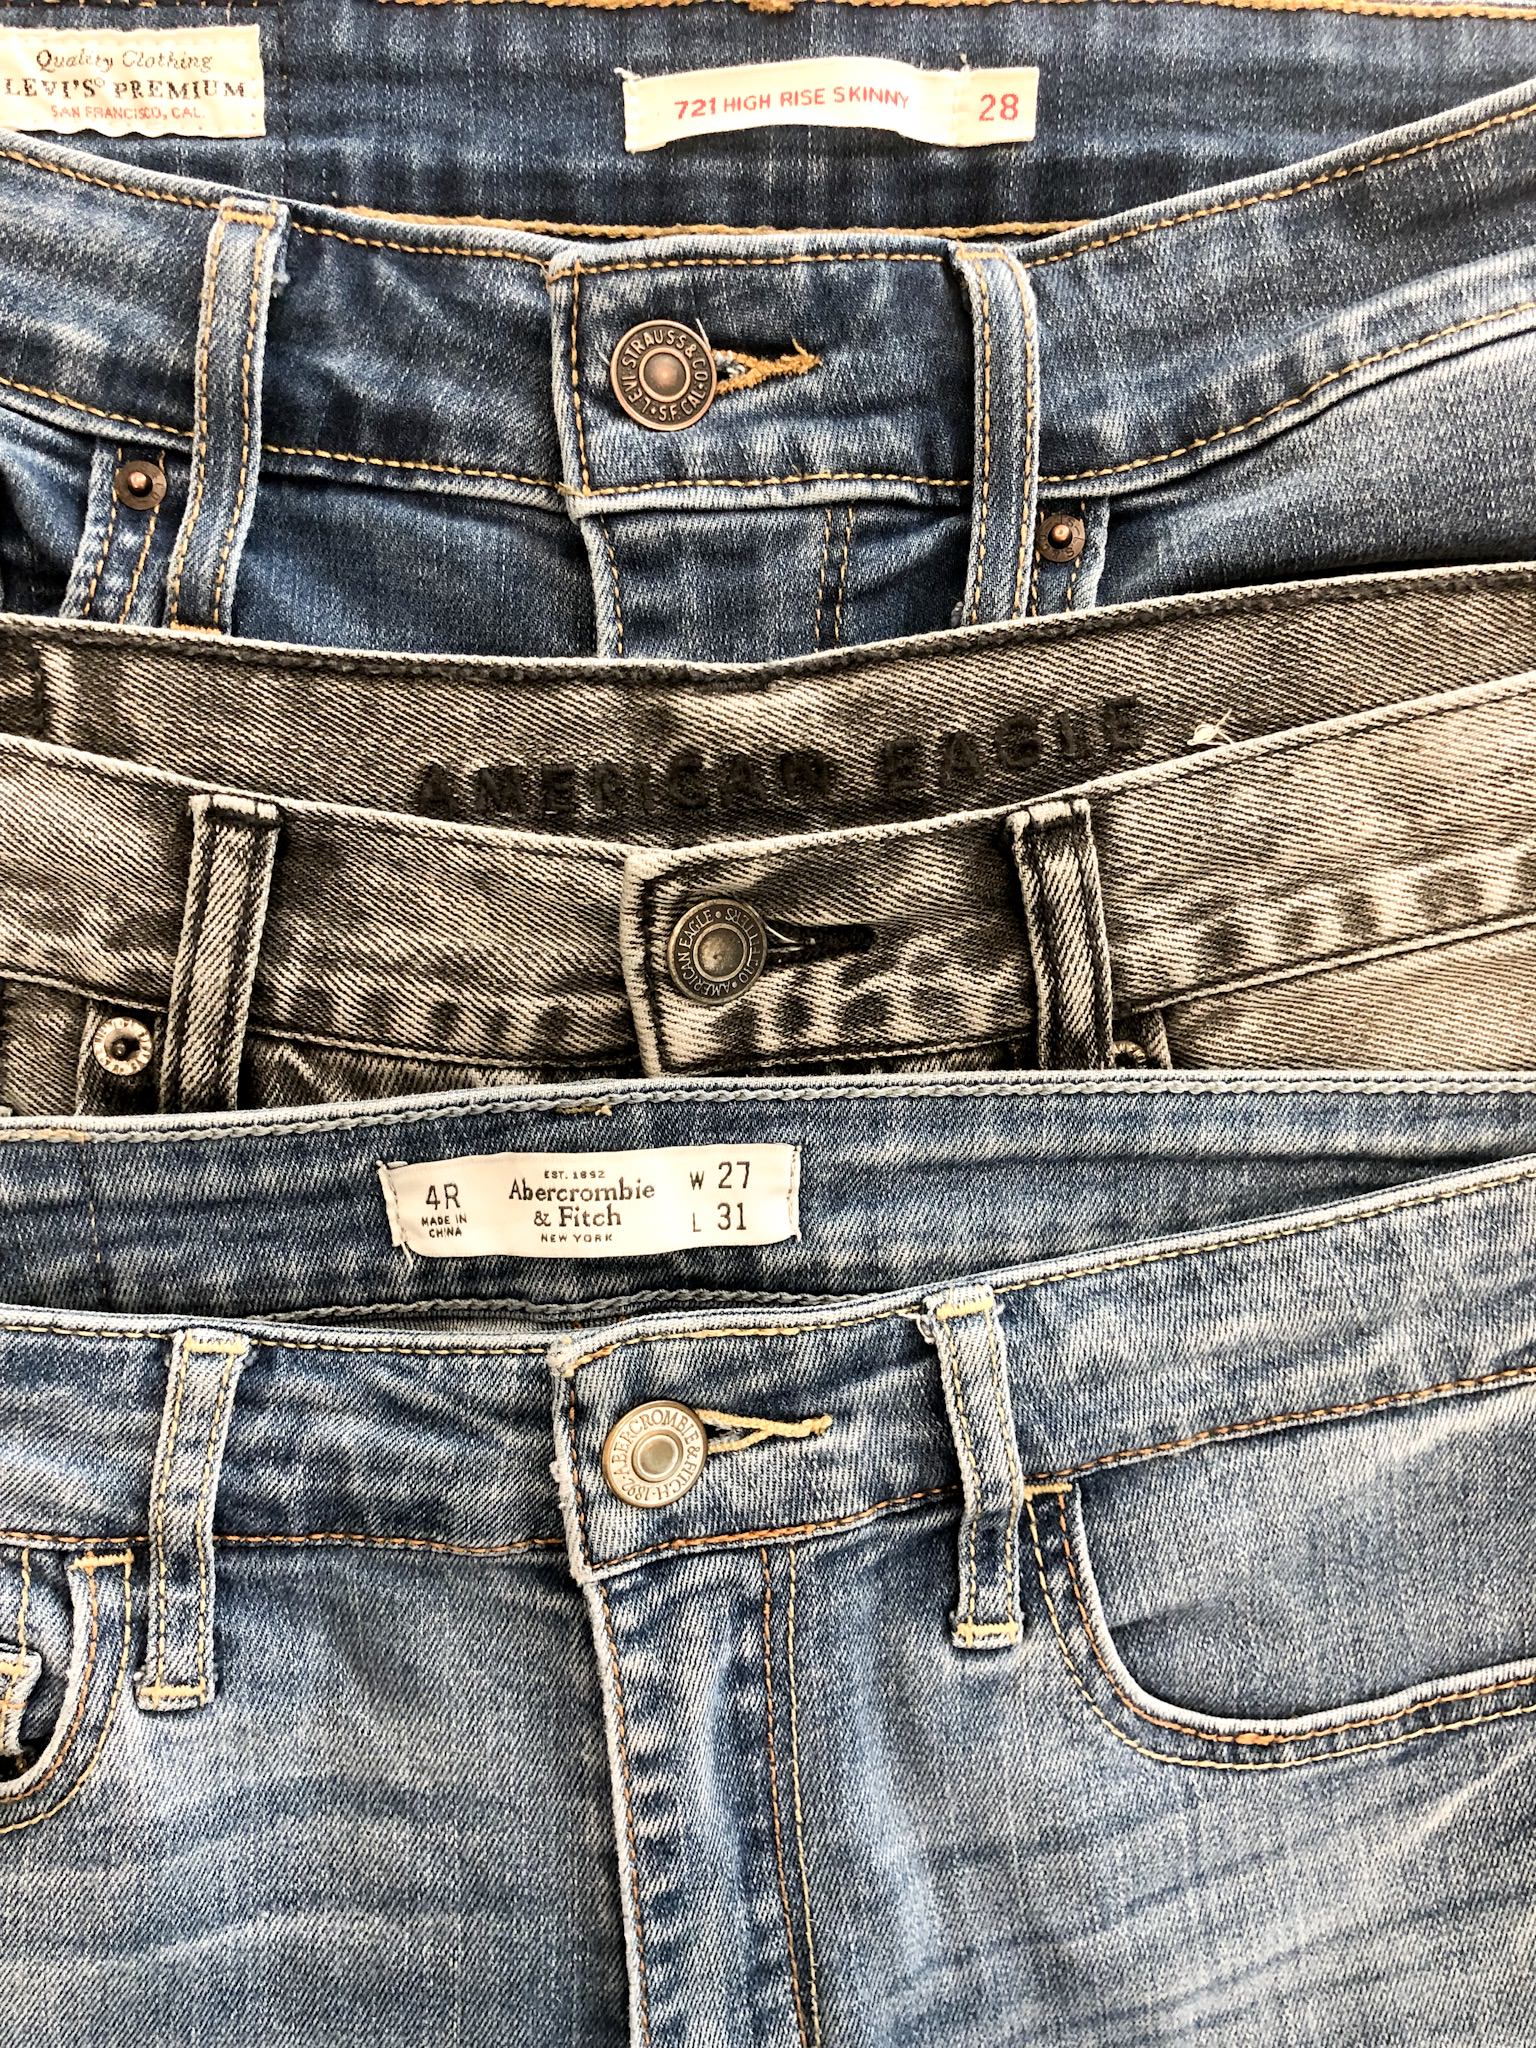 Abercrombie Jeans Size Chart